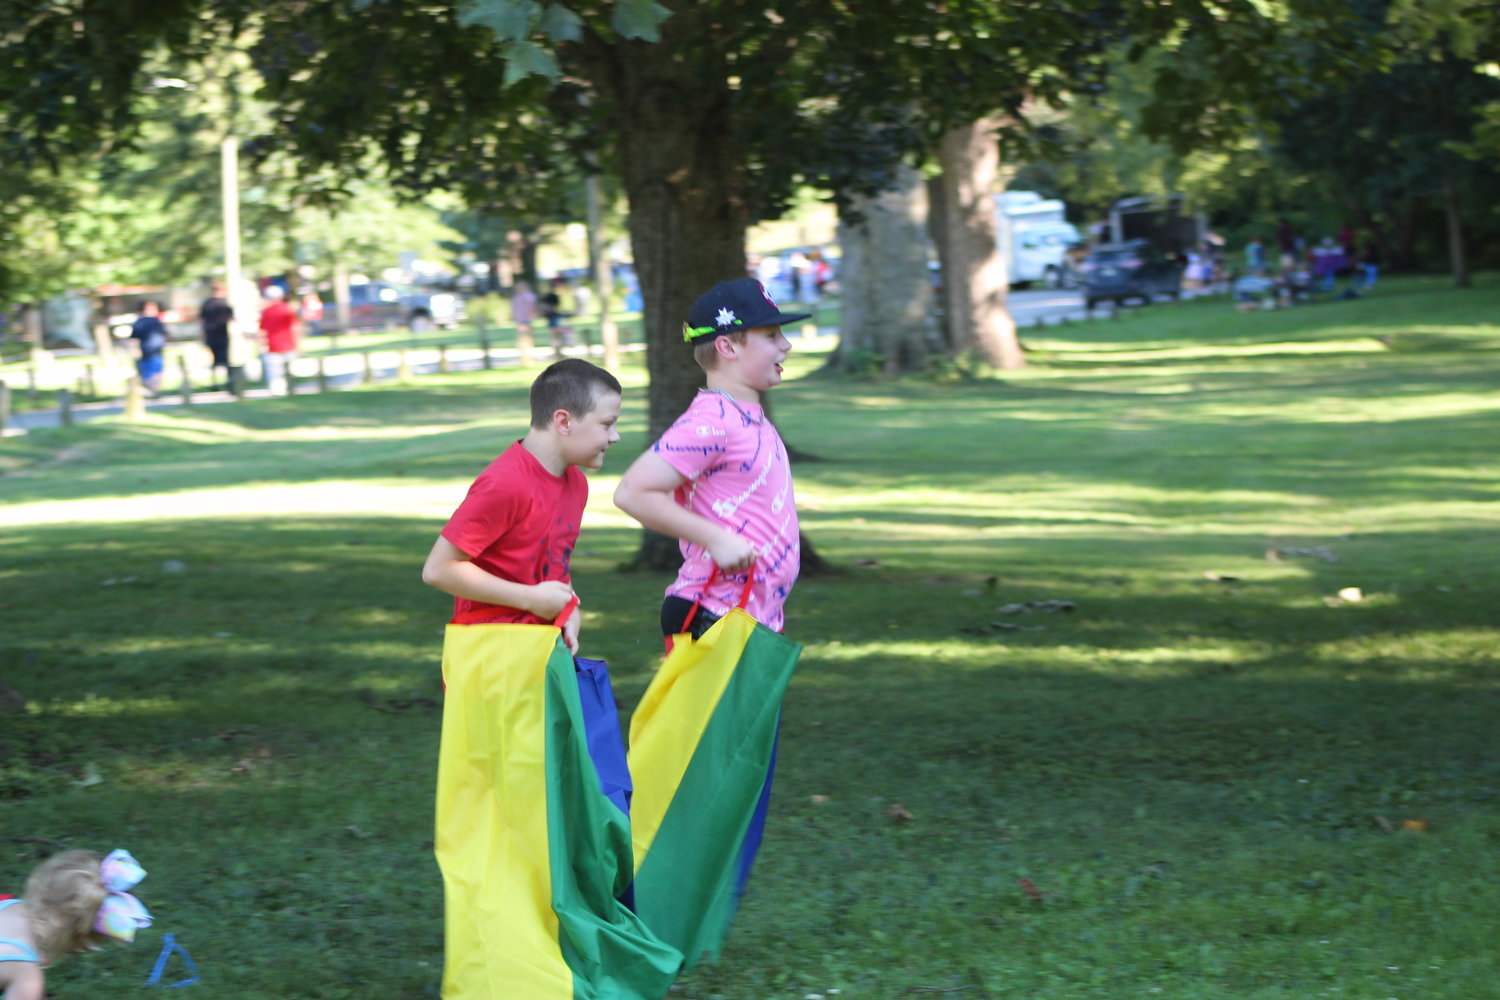 Kids enjoy sack races in the park.